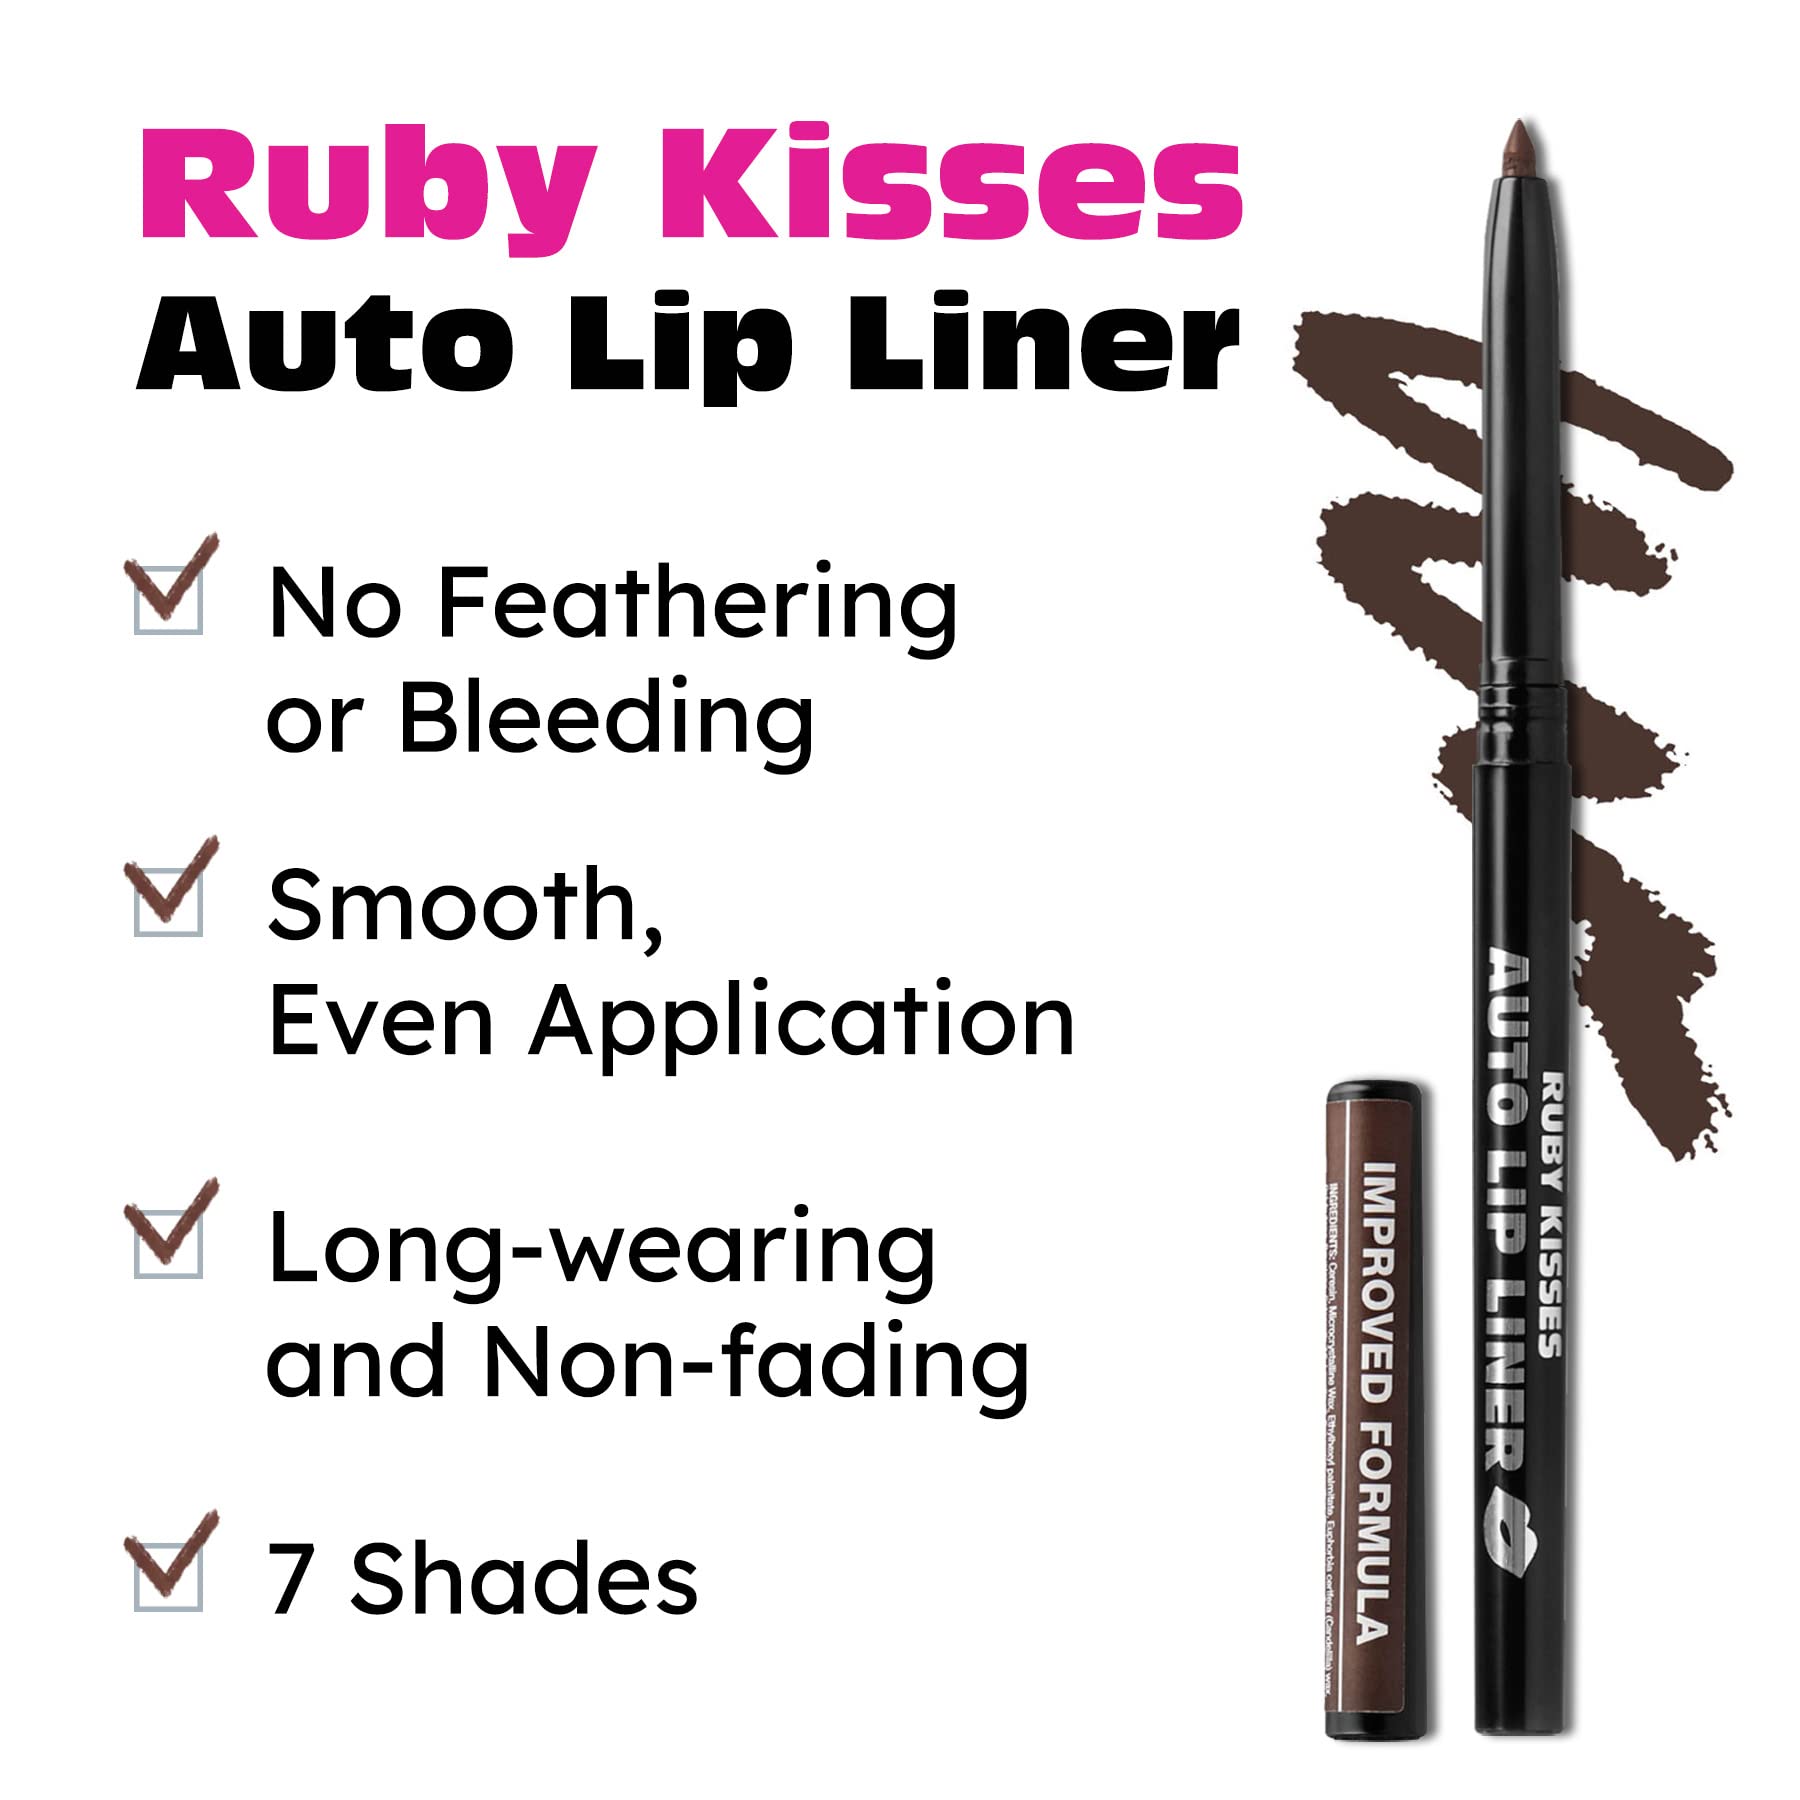 Ruby Kisses Auto Lip Liner Pencil, Long Lasting, Smooth Application Mechanical Lip Liner Pencil (Dark Brown)